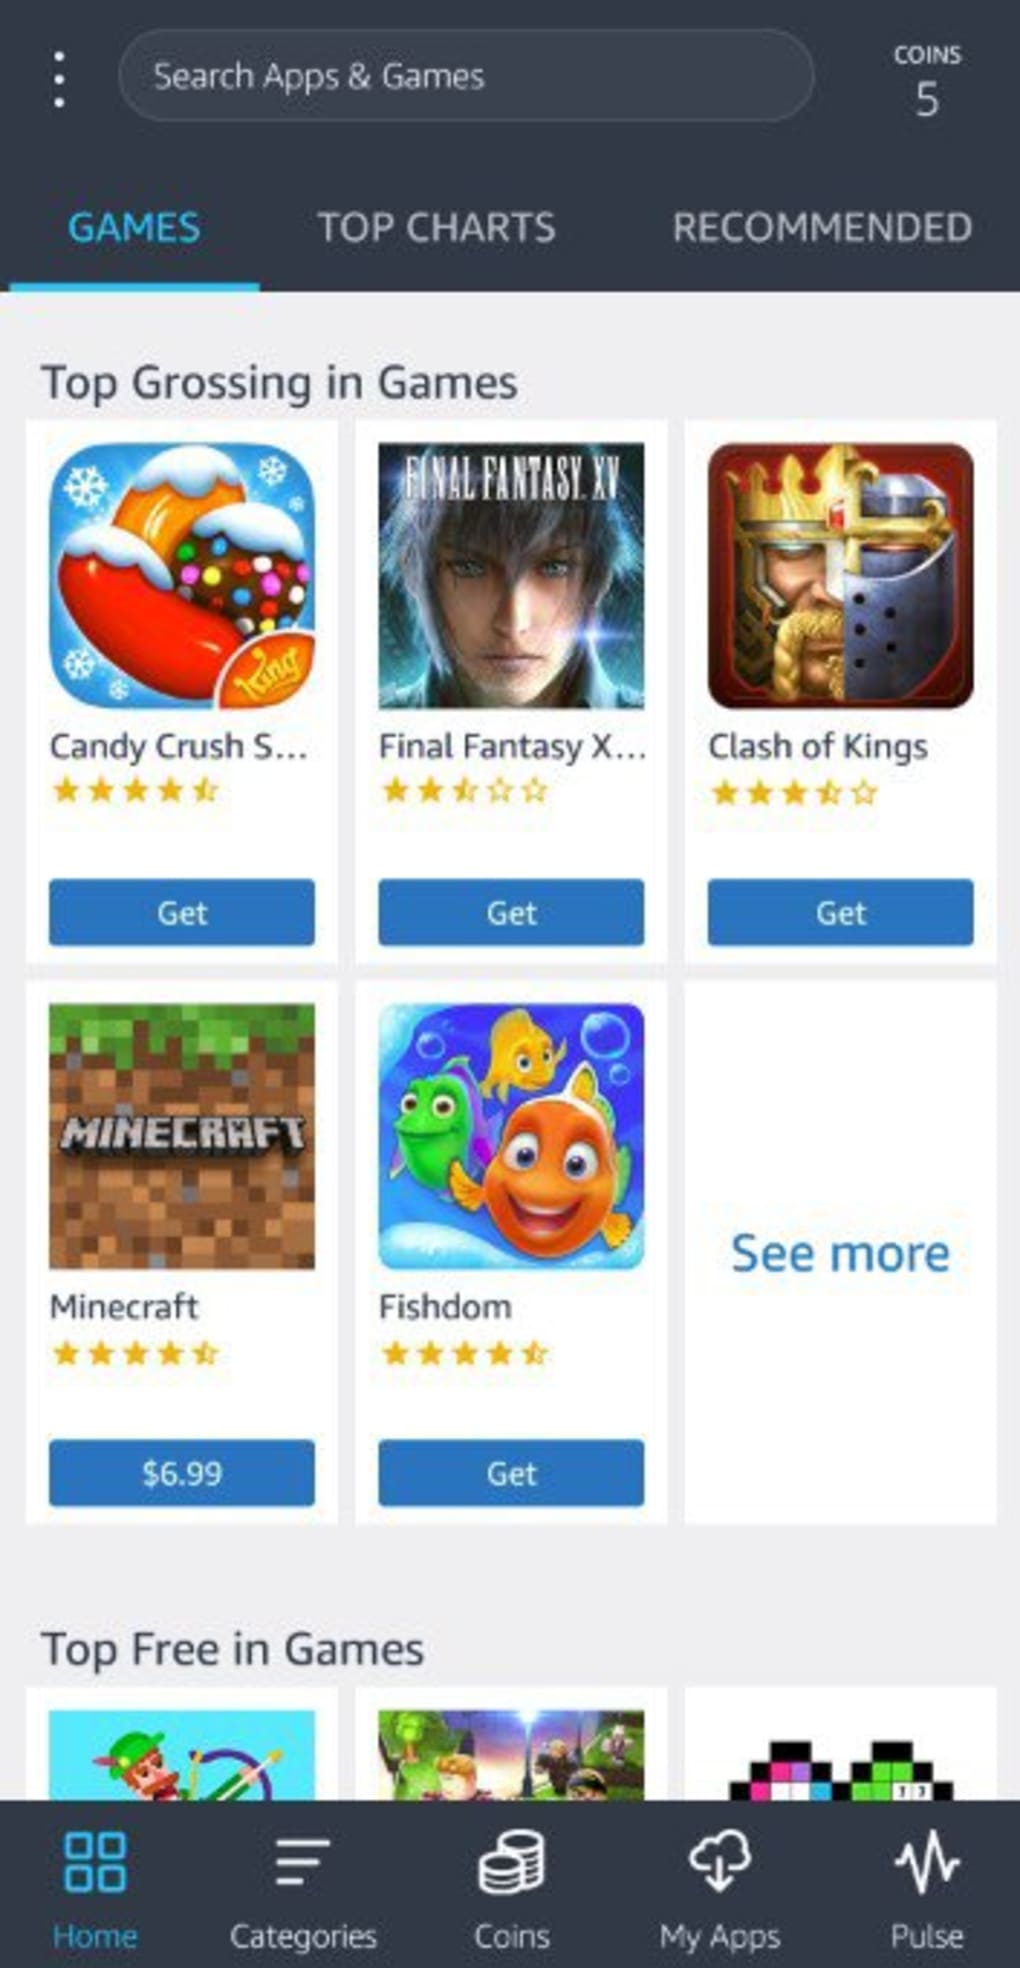 download amazon app store